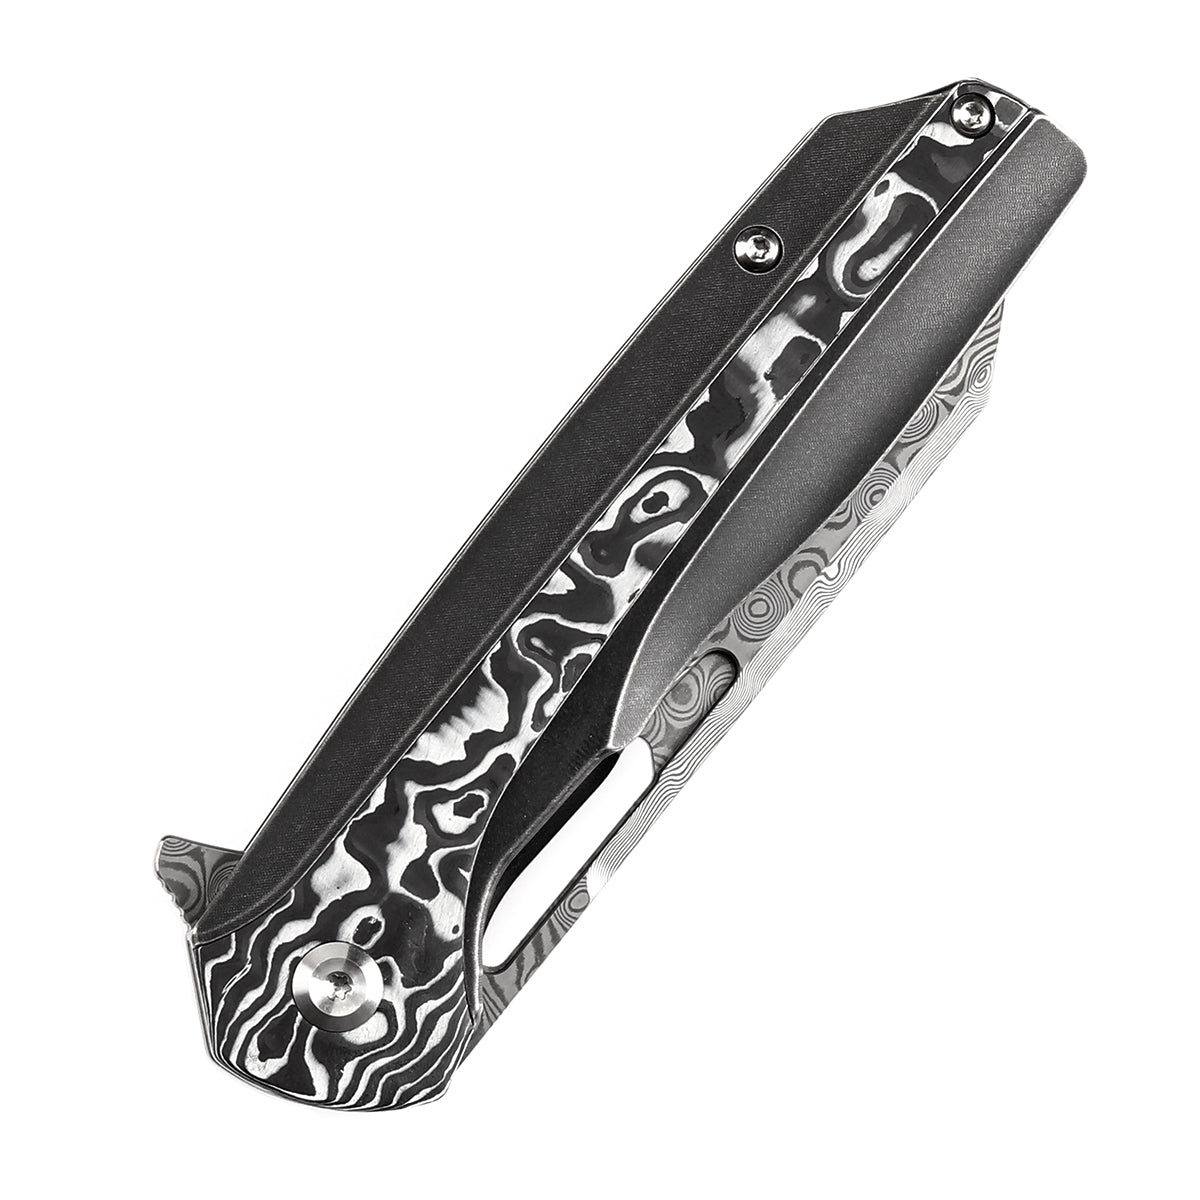 Kansept Shard K1006C3 大马士革刀片白色碳纤维手柄折叠刀